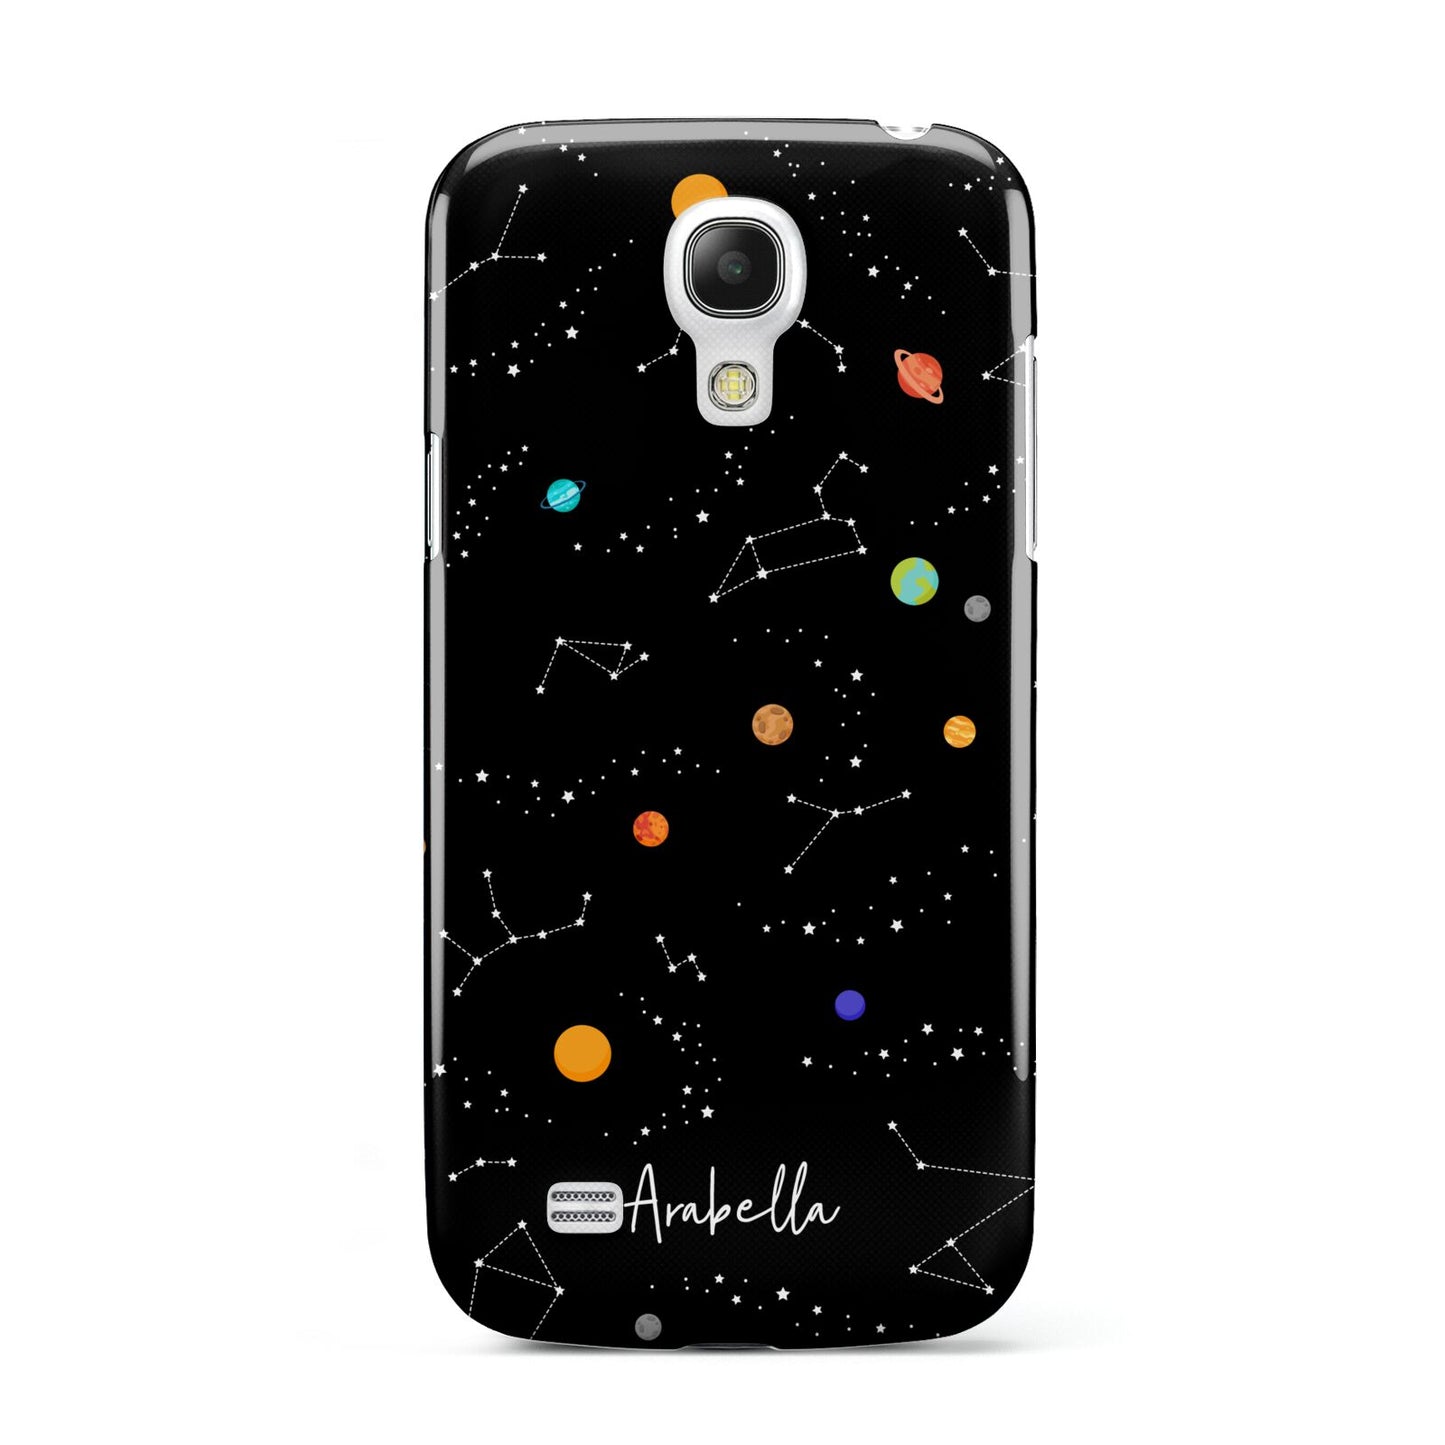 Galaxy Scene with Name Samsung Galaxy S4 Mini Case